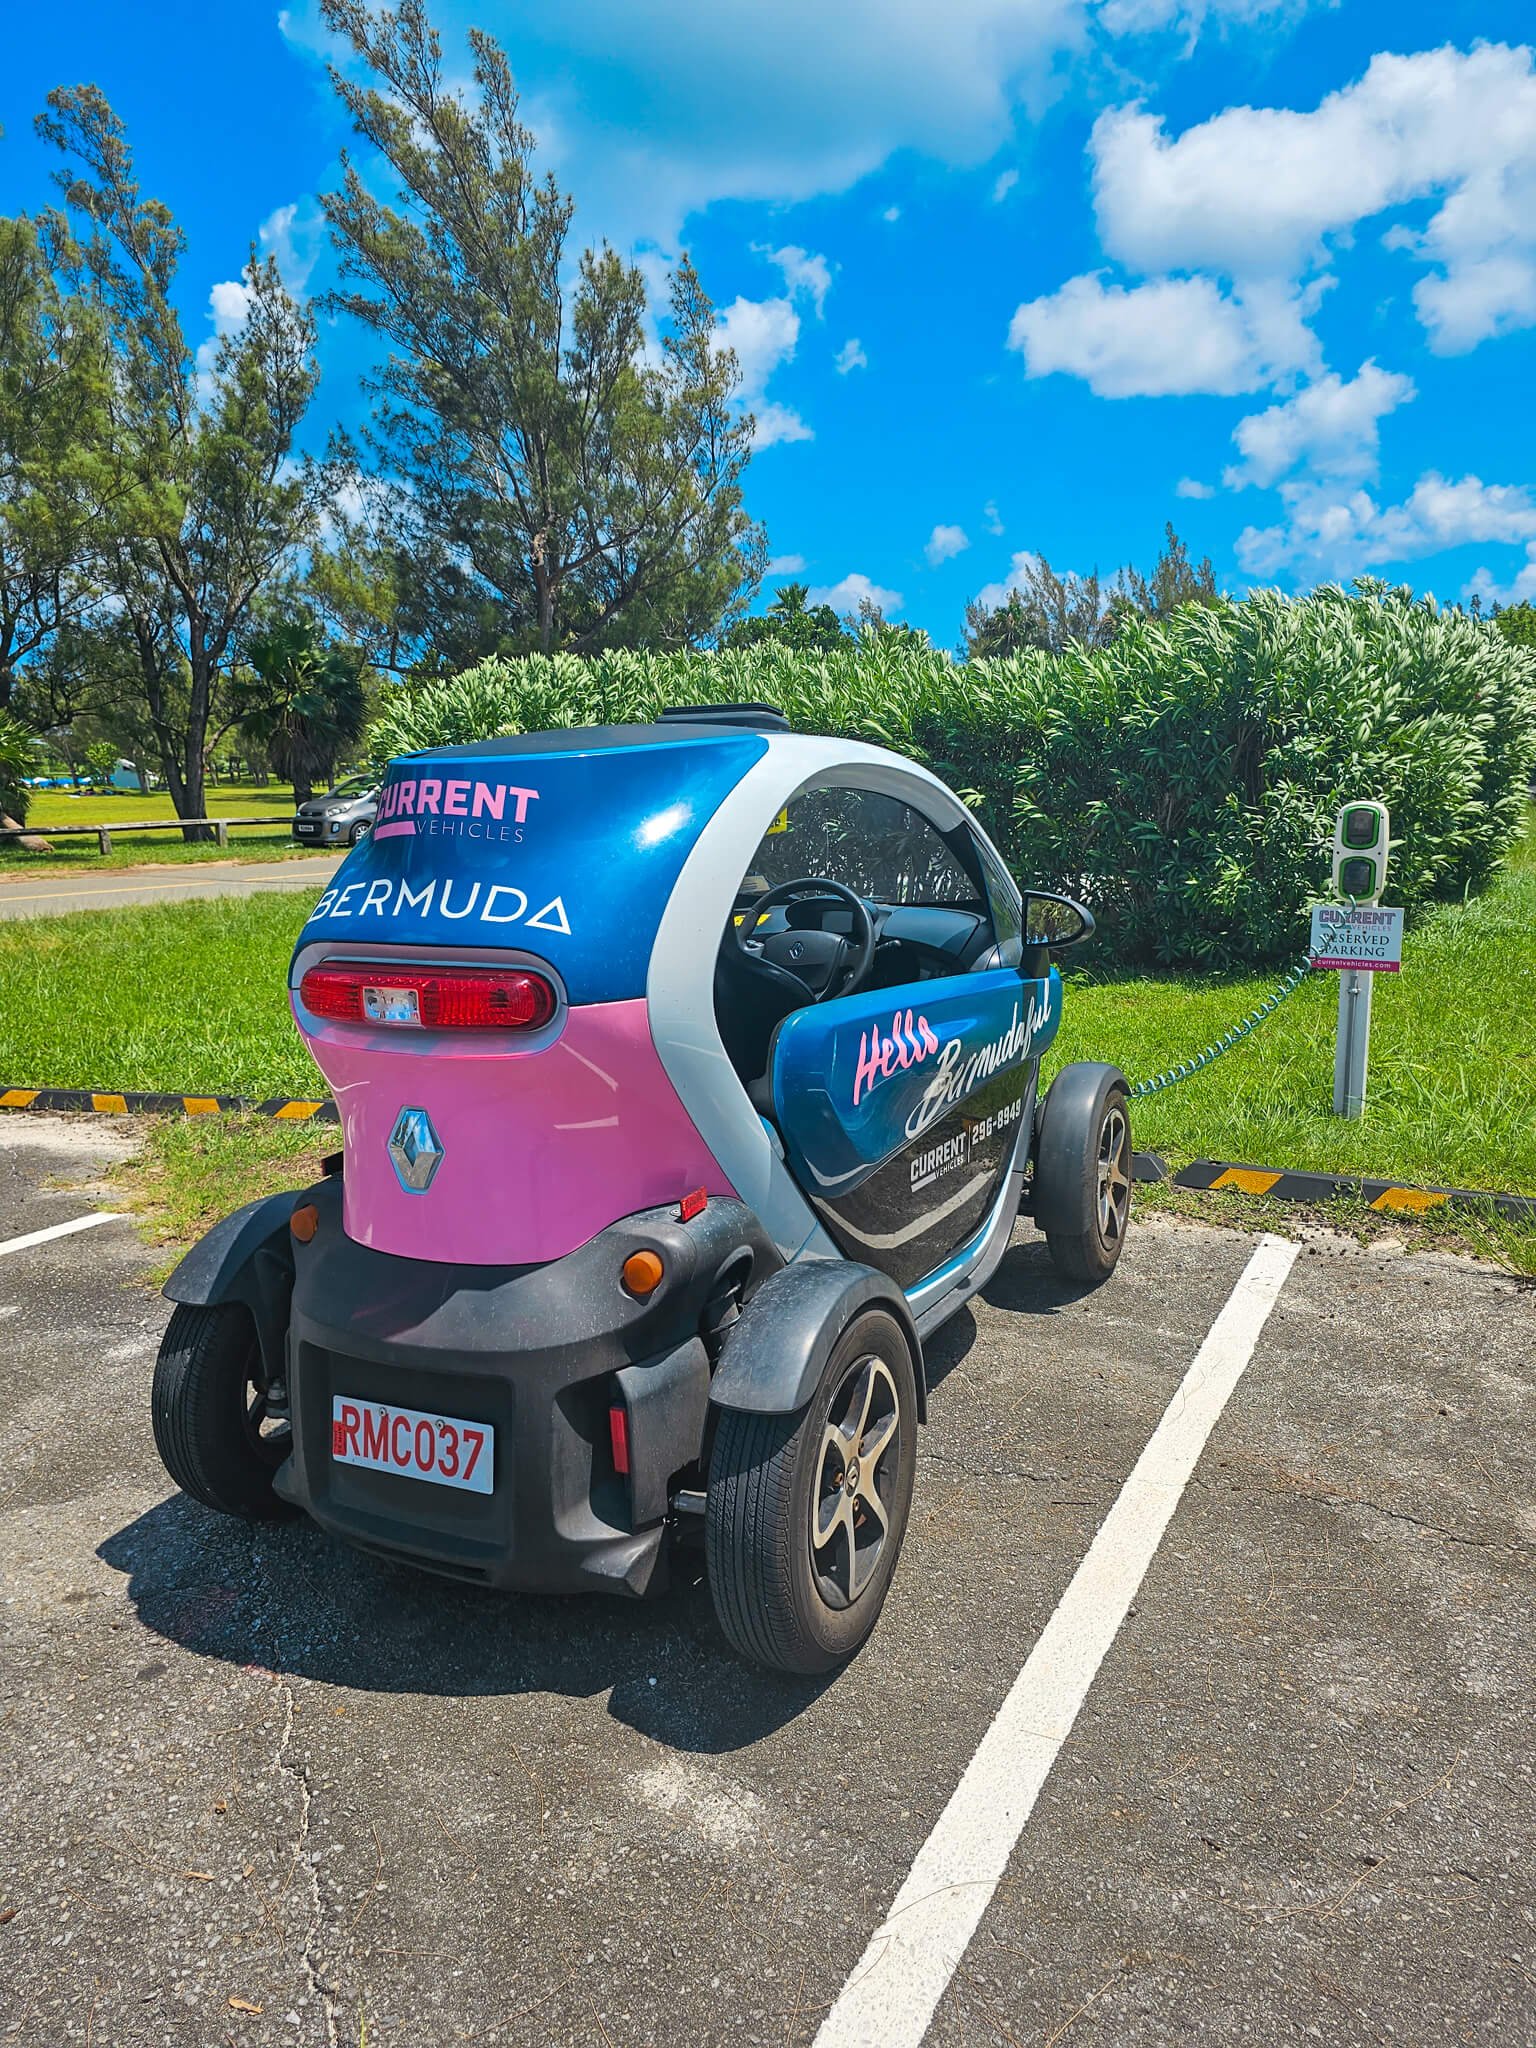 rental cars in Bermuda